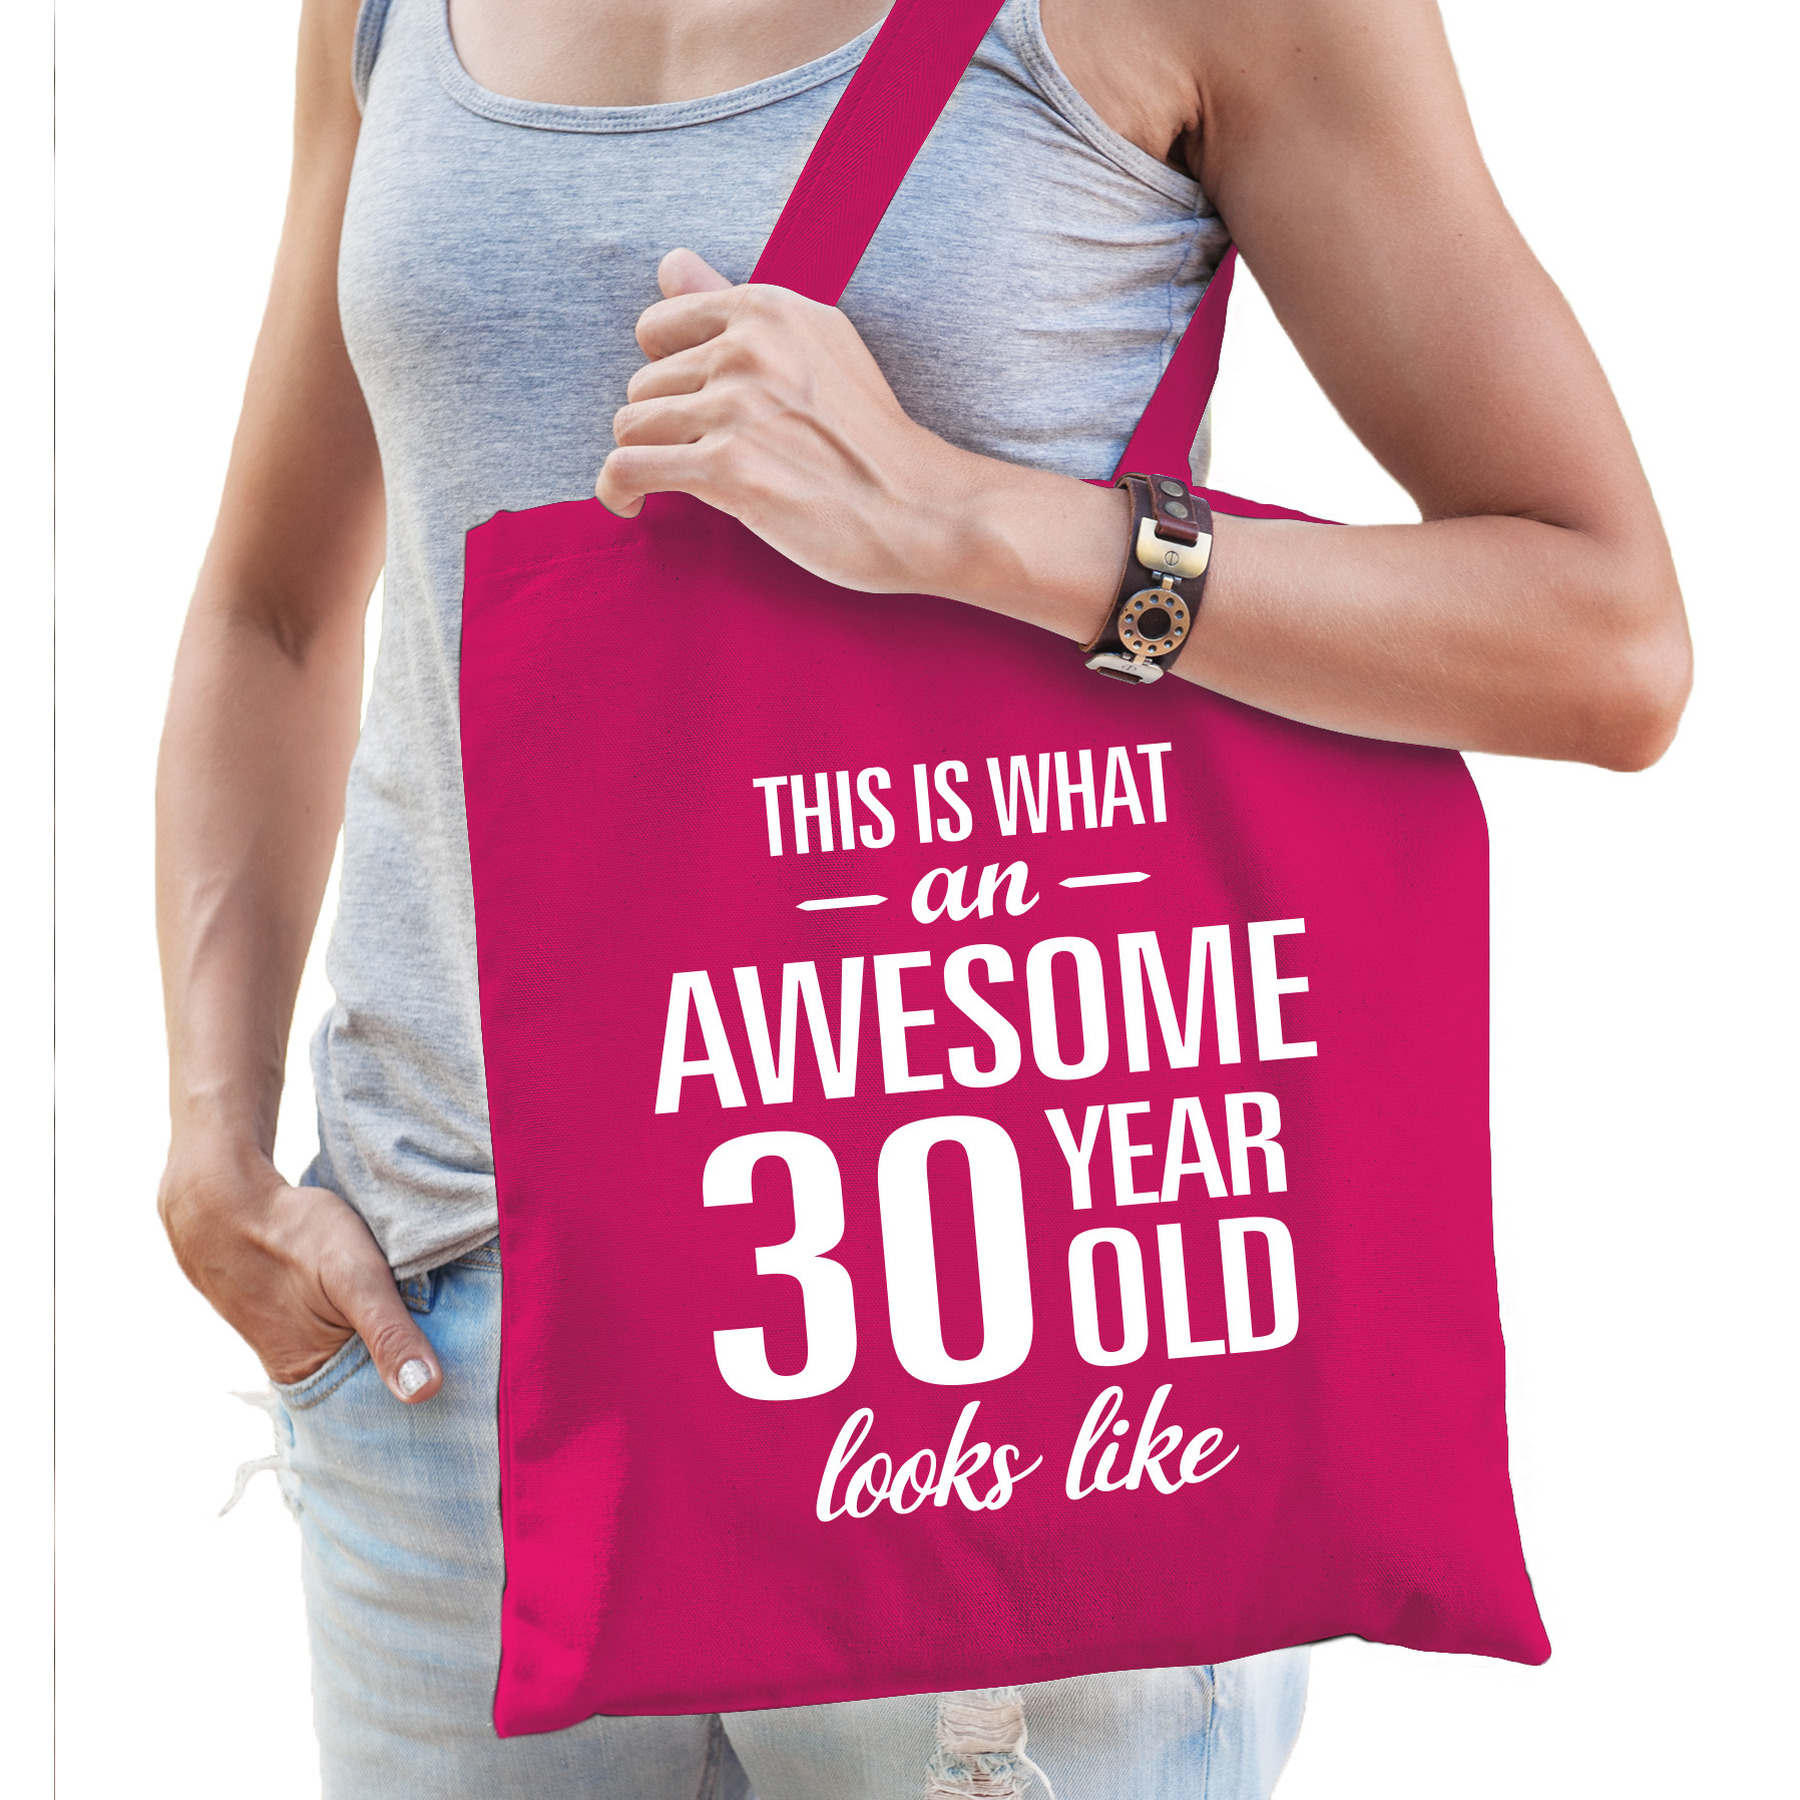 Awesome 30 year / geweldig 30 jaar cadeau tas roze voor dames